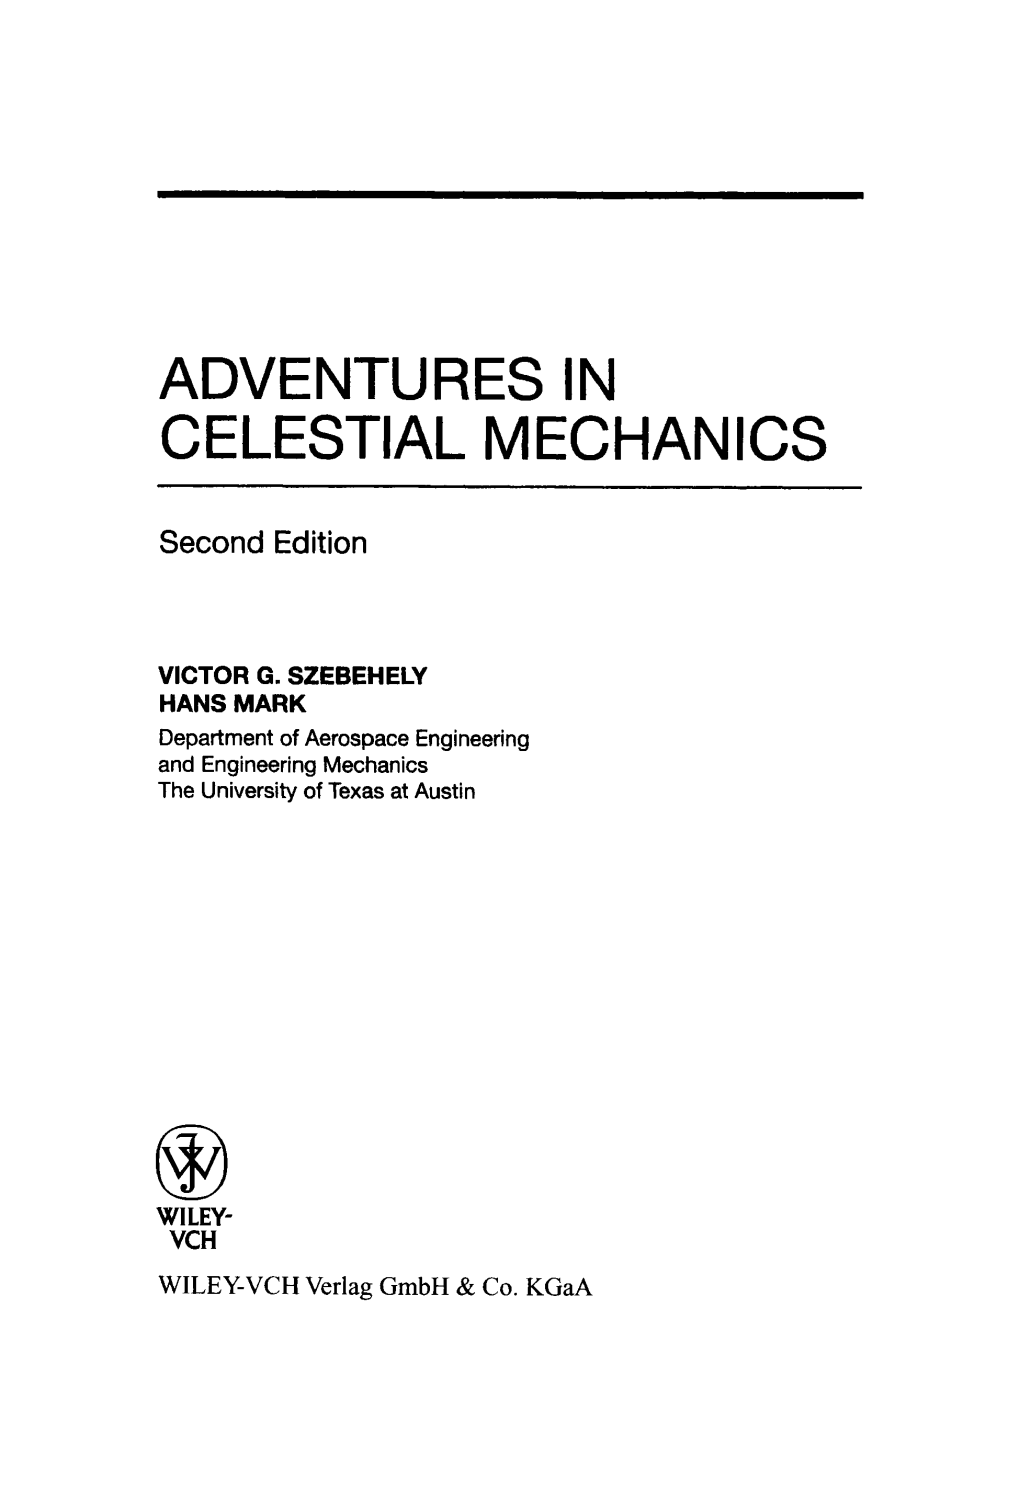 Adventures in Celestial Mechanics